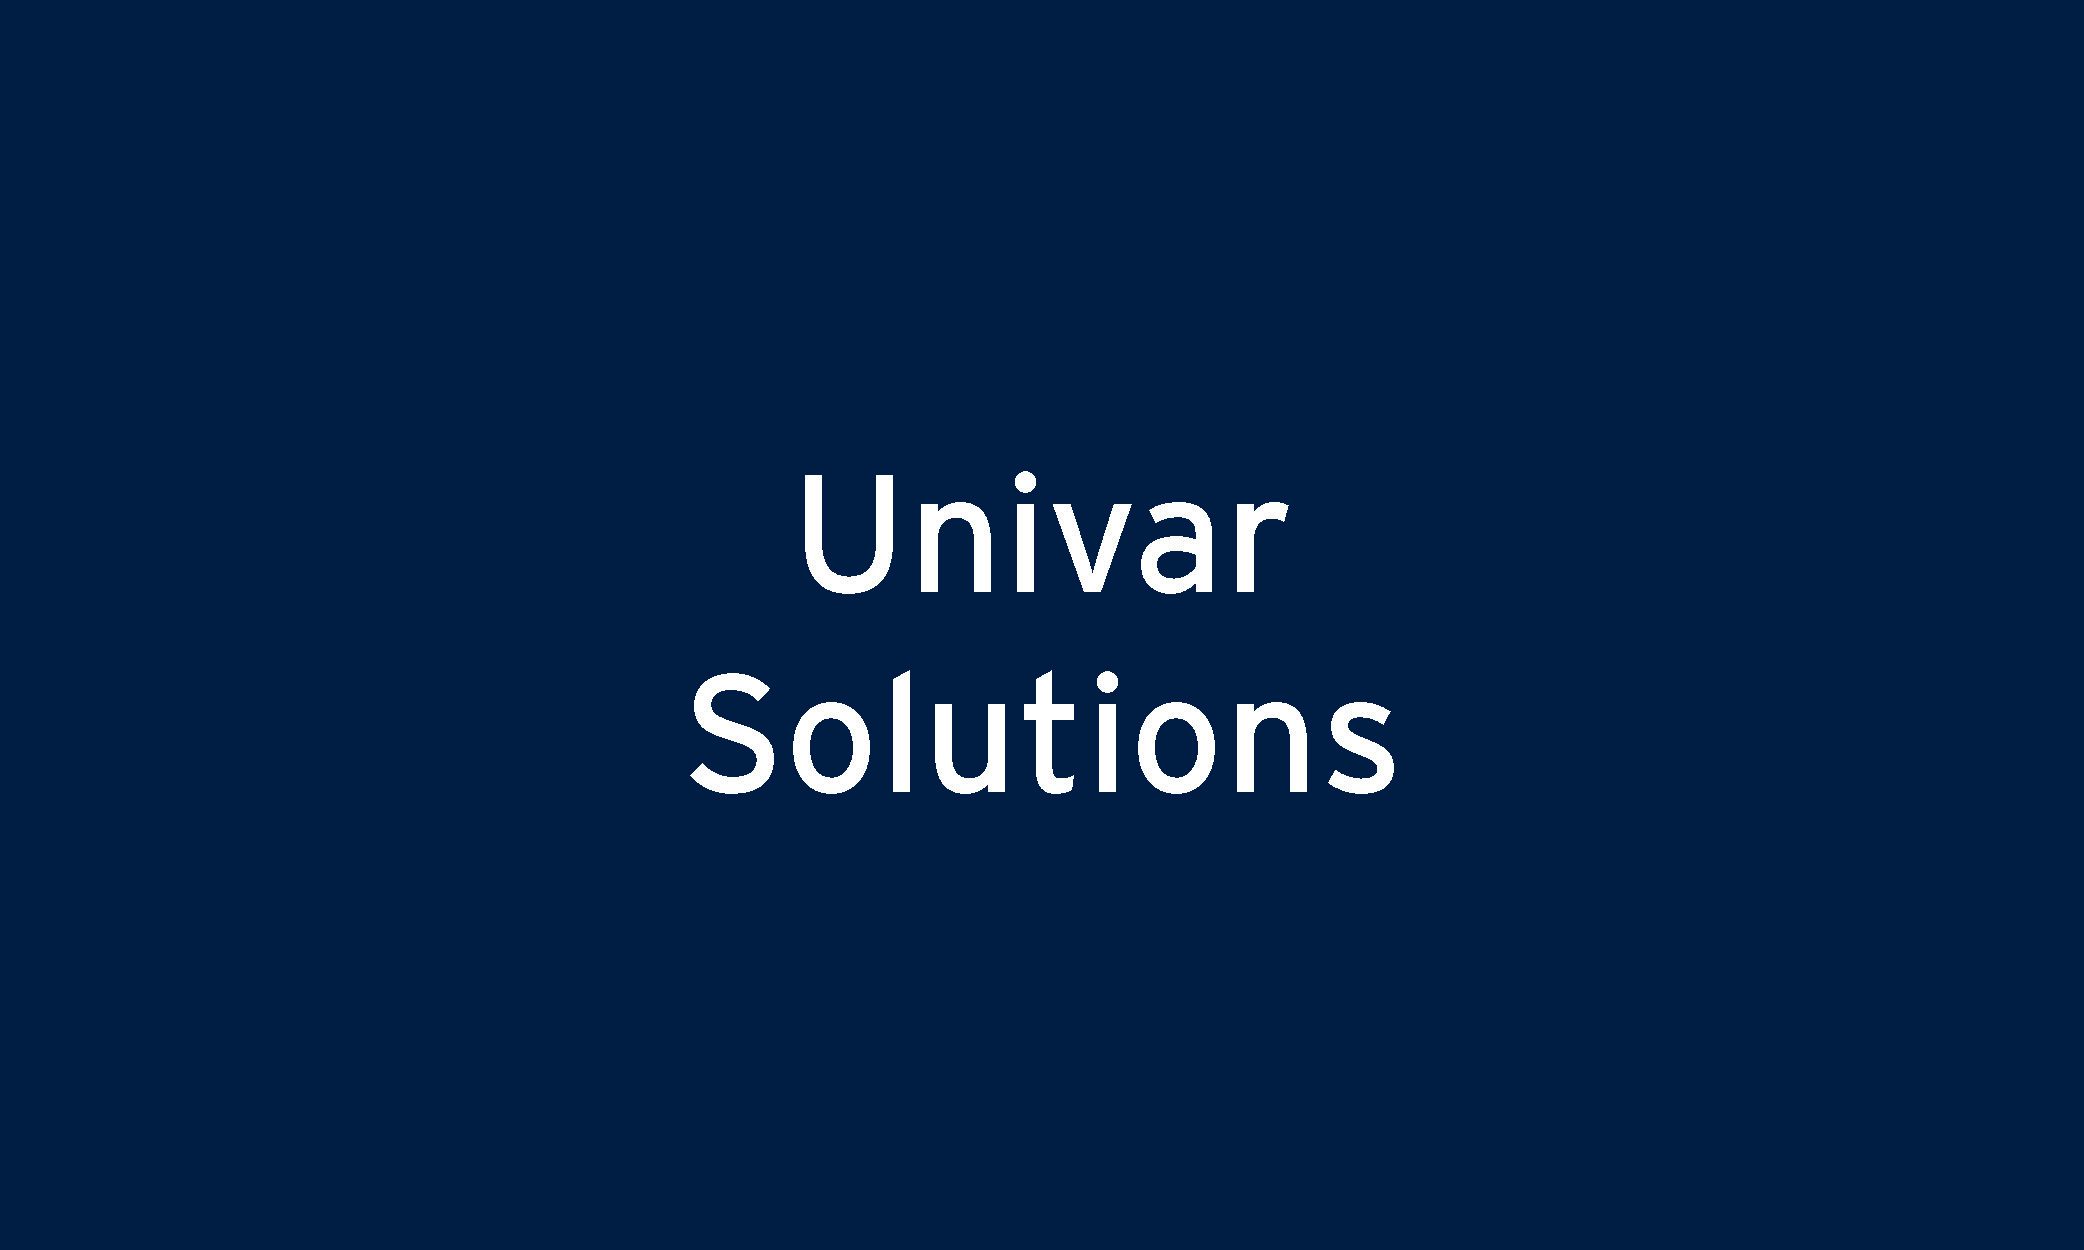 Univar Solutions